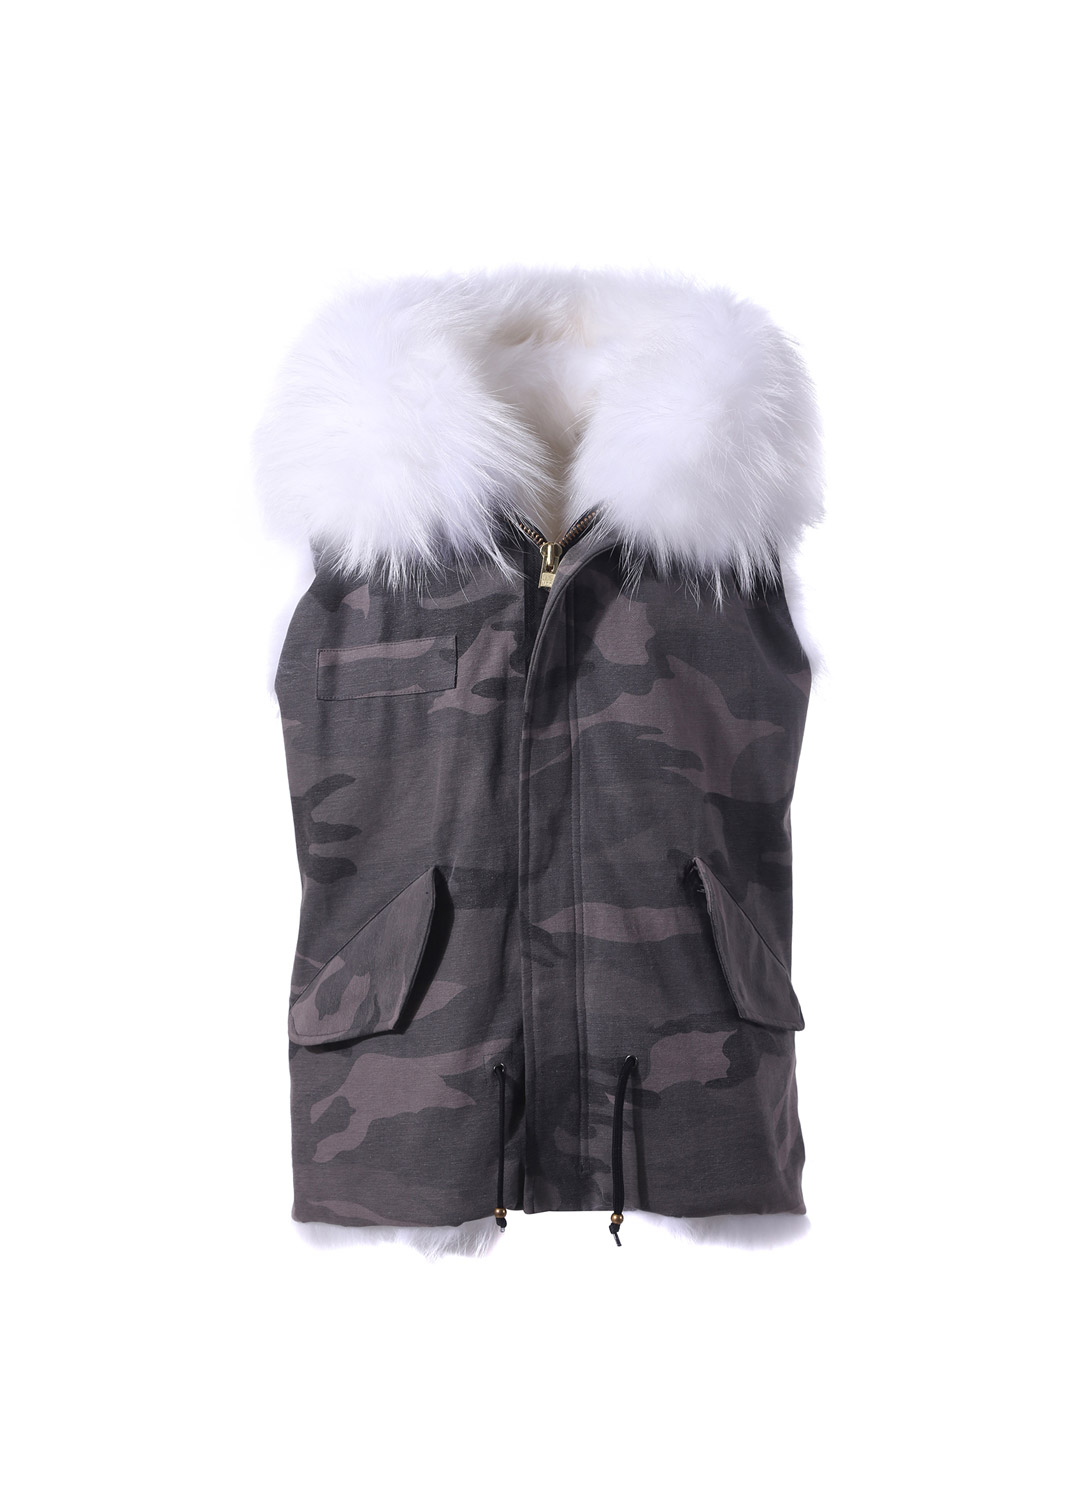 Fox vest parka [White &amp; Camouflage]